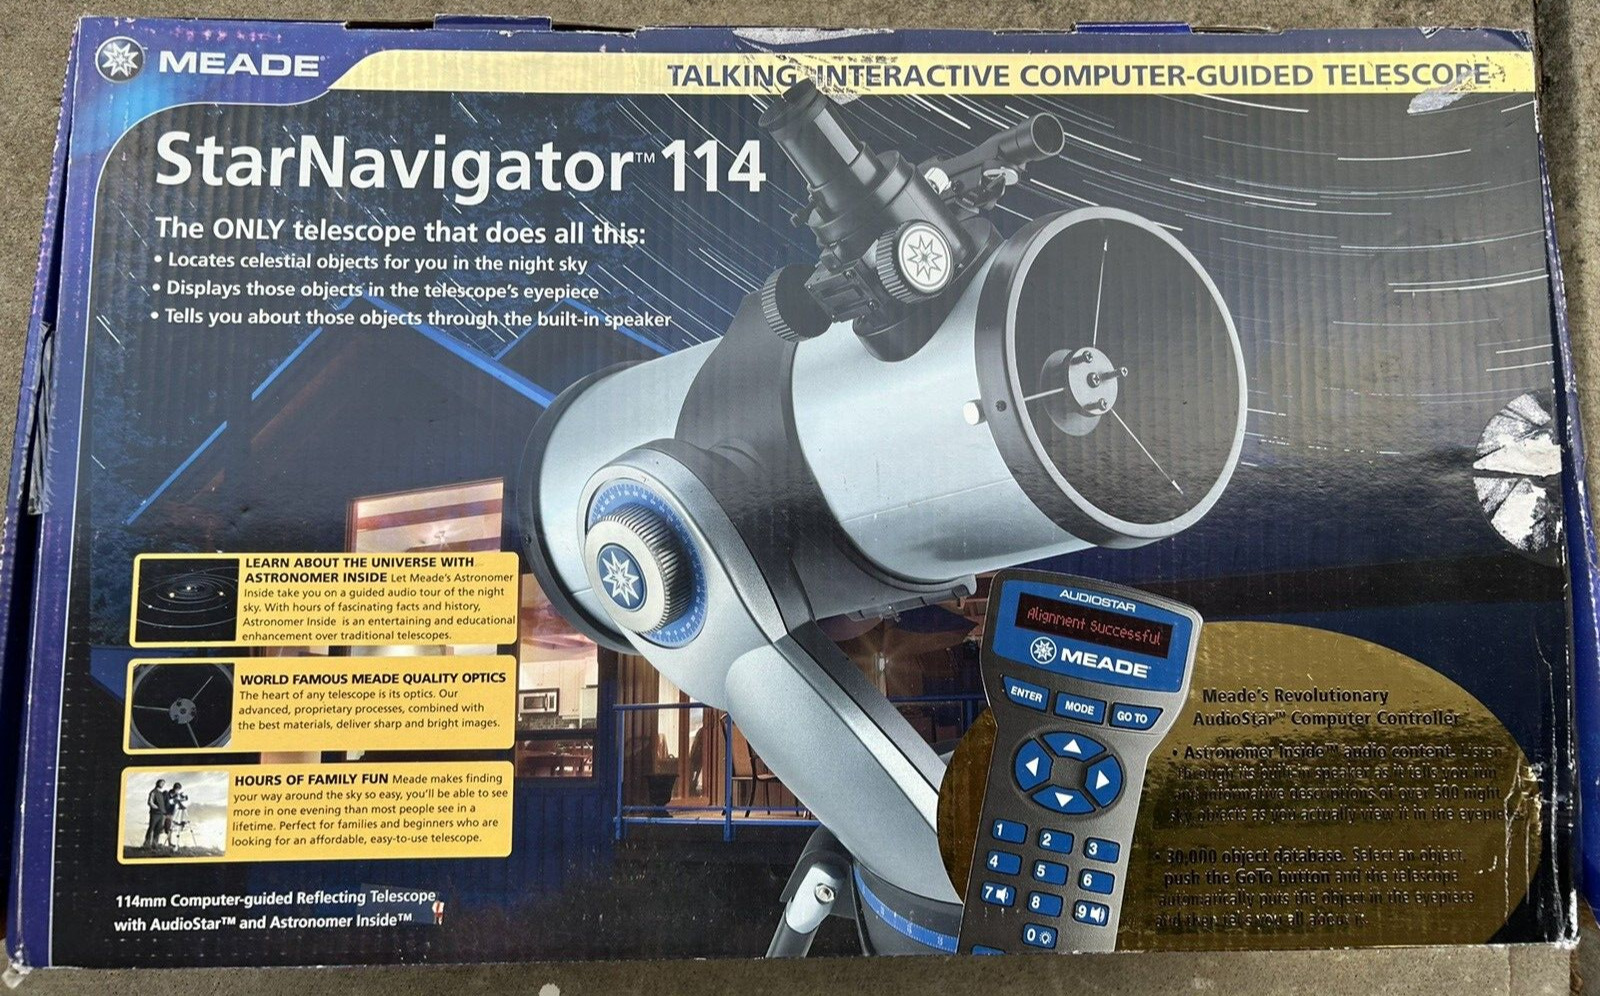 NIB Meade StarNavigator 114 Audio-Star Talking Computer-Guided Telescop